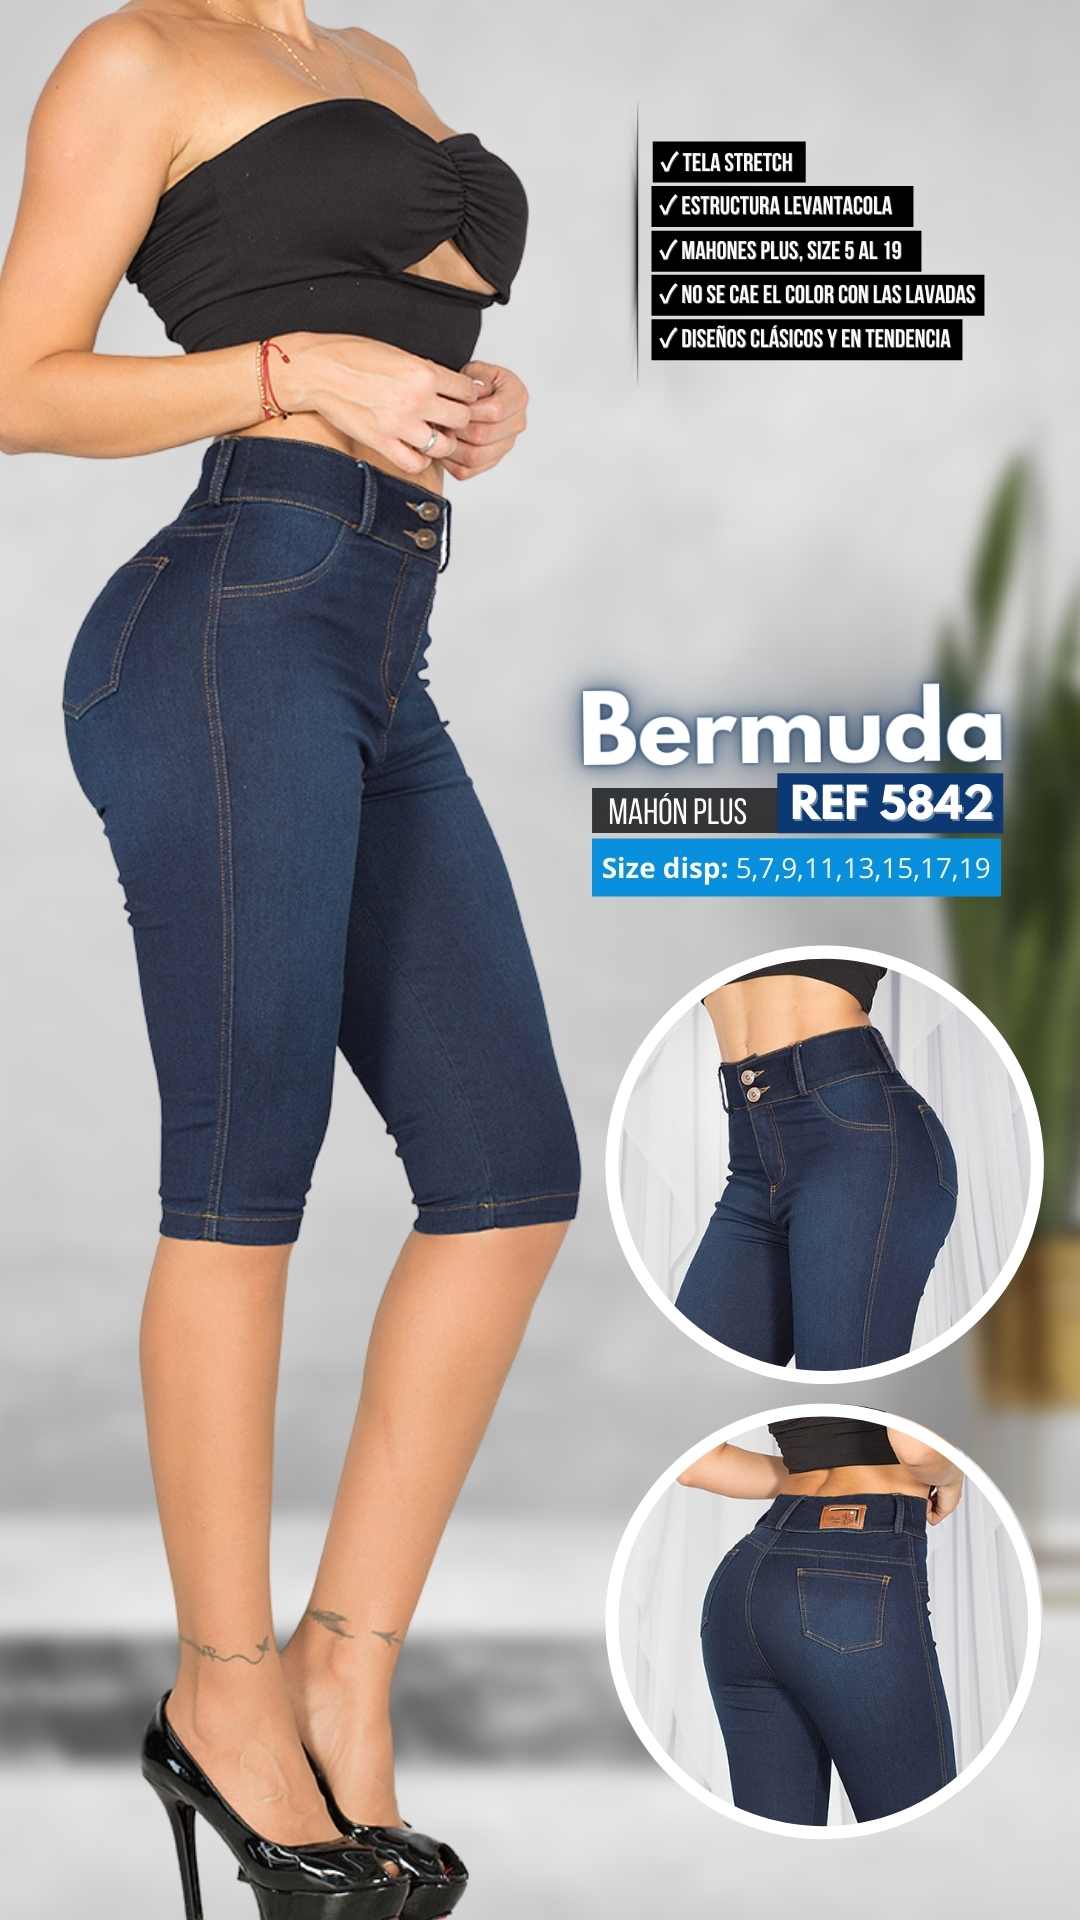 Bermuda Refer. 5842